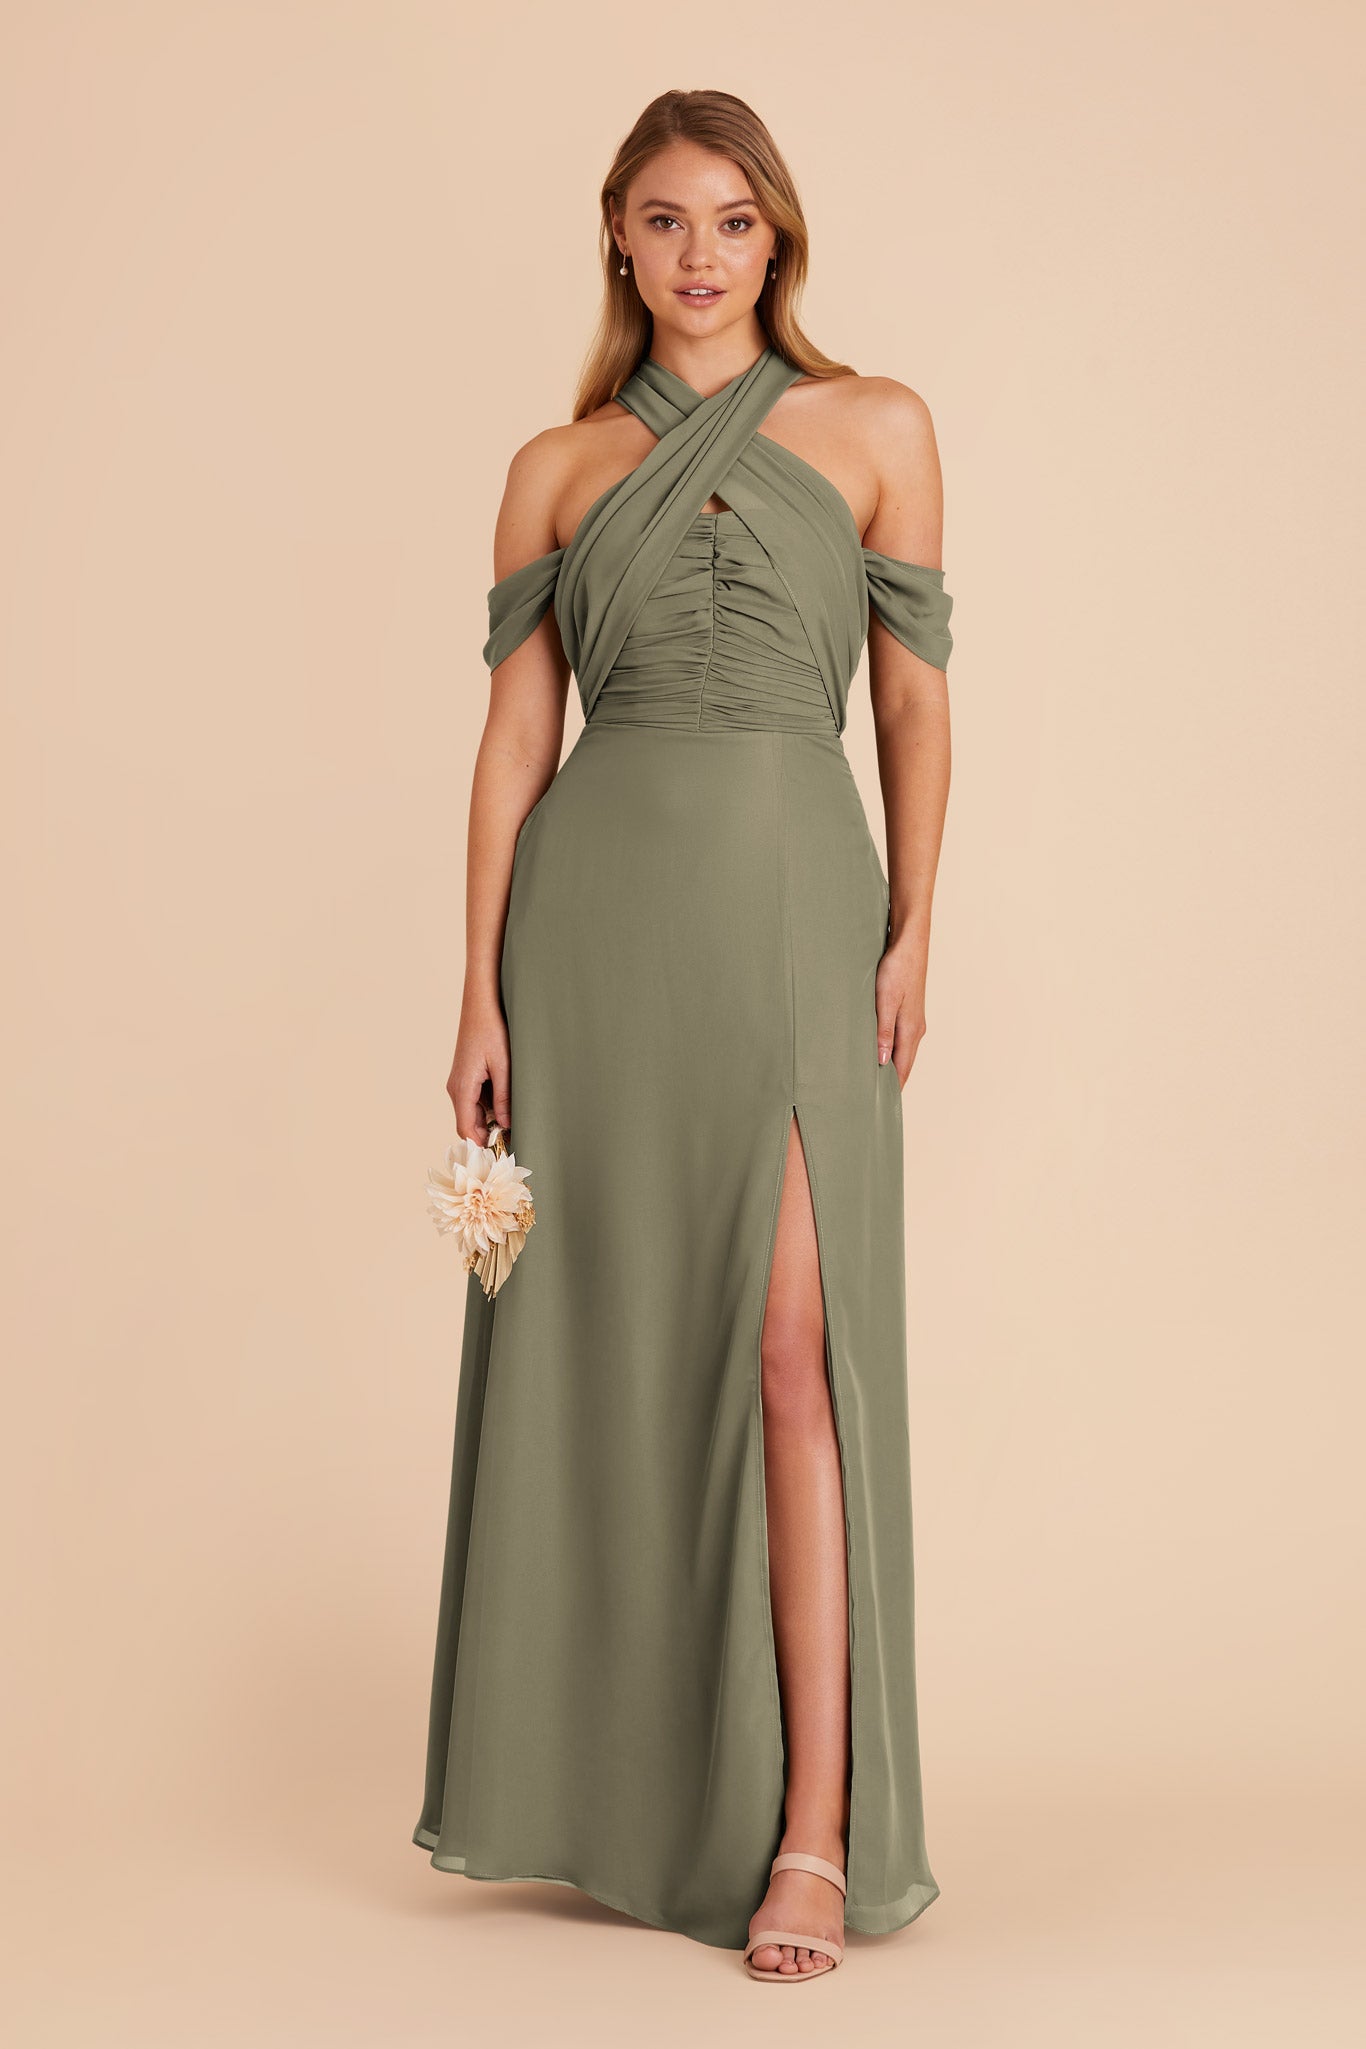 Moss Green Cara Chiffon Dress by Birdy Grey